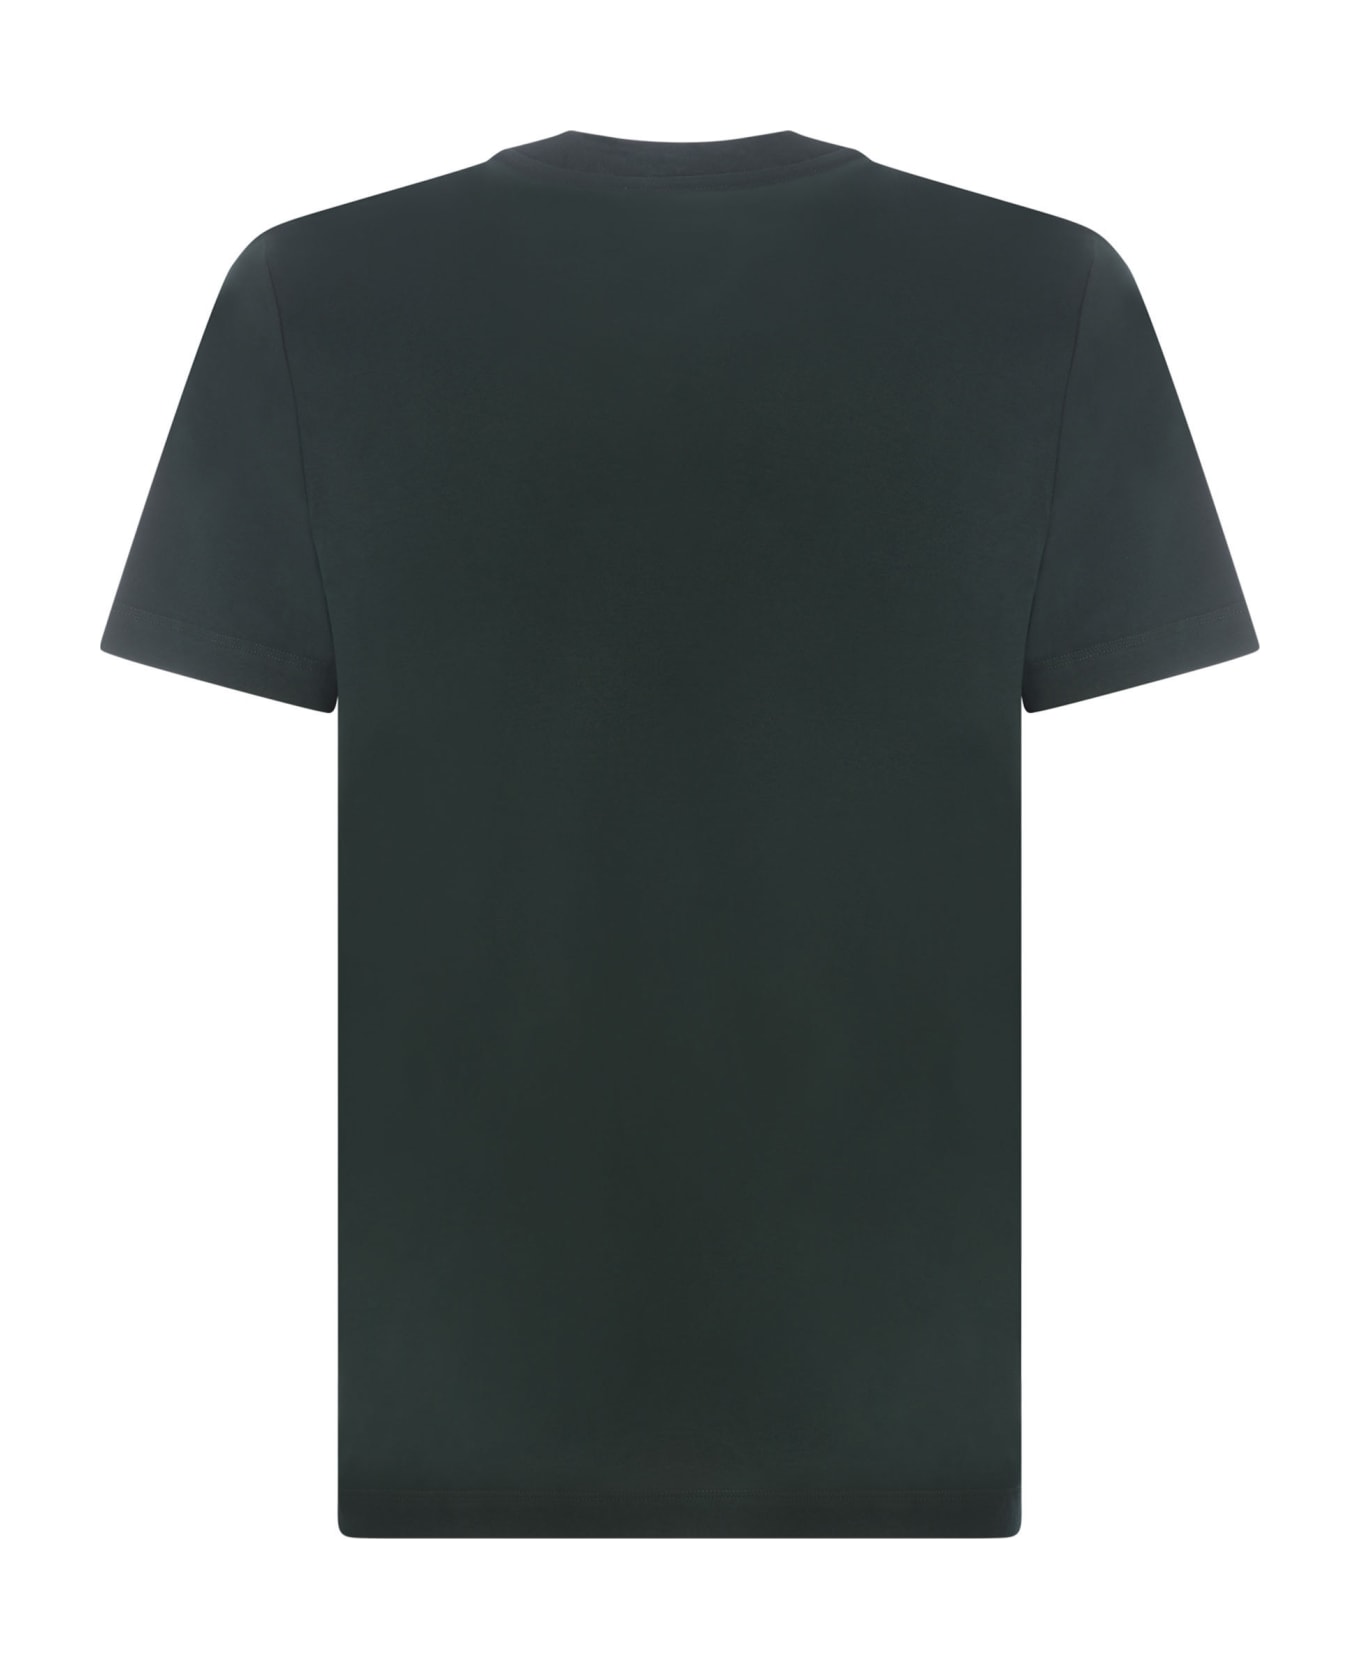 Marni Green Bio Cotton T-shirt - GREEN